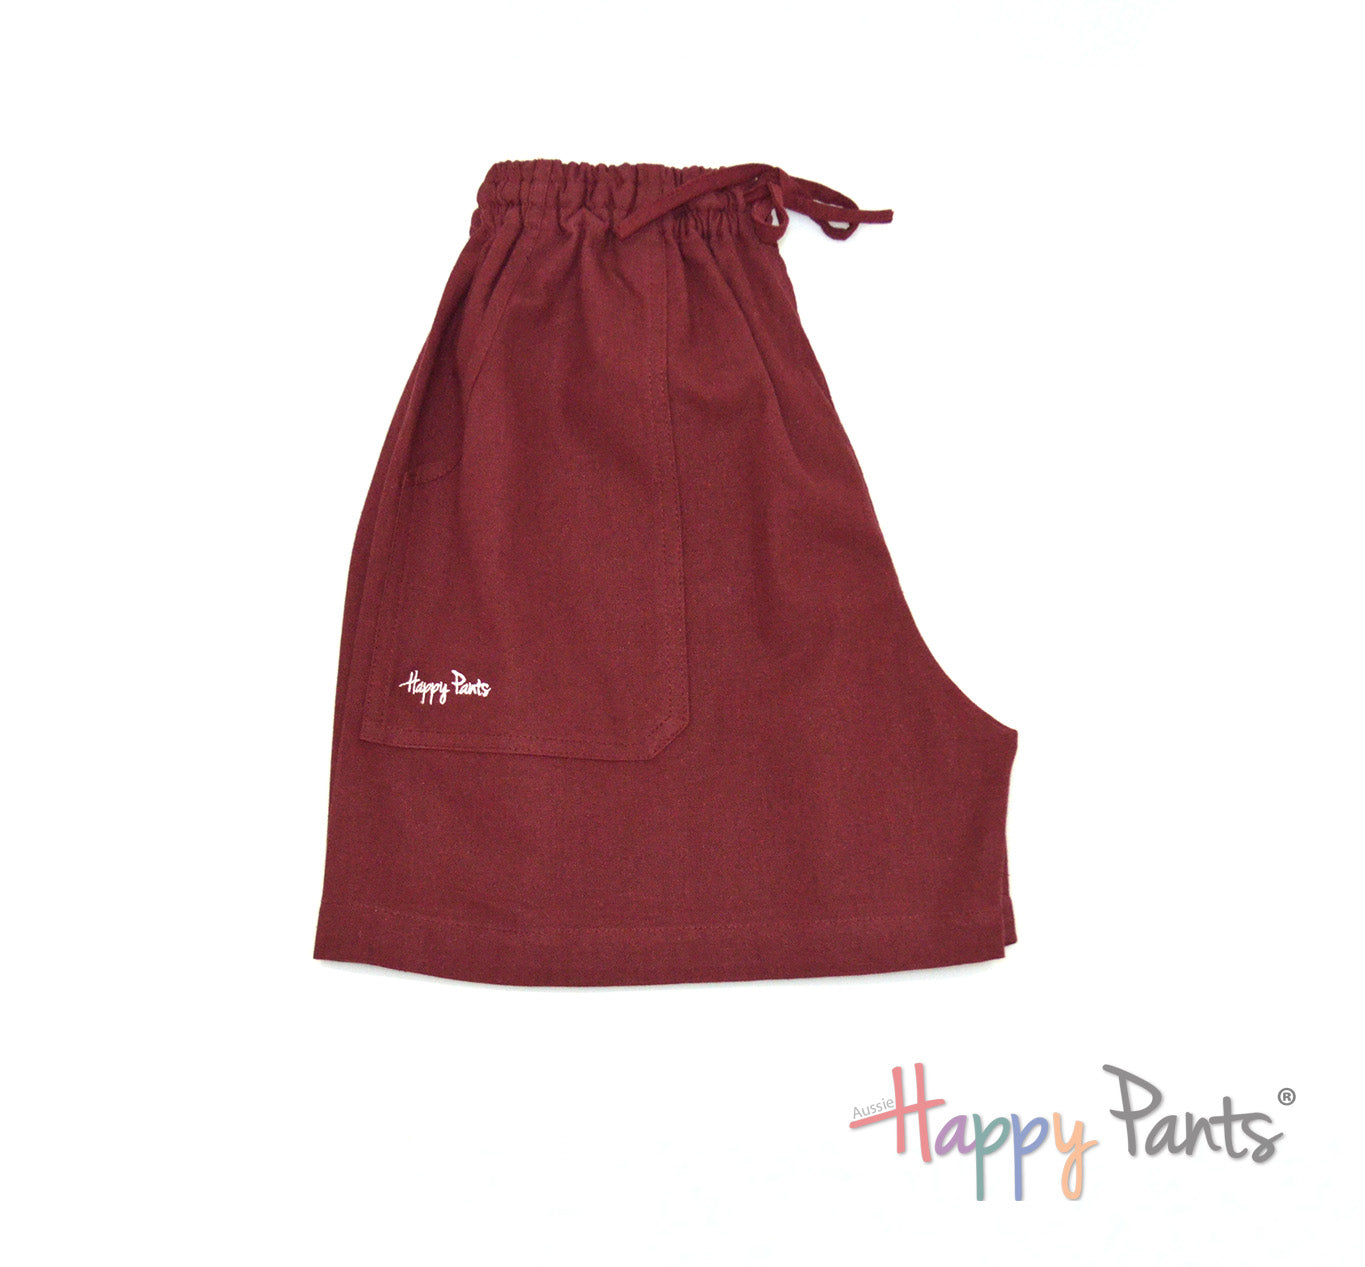 Burgundy maroon cotton shorts with elastic waist holiday pants resort wear Australia comfy bermudas bordies